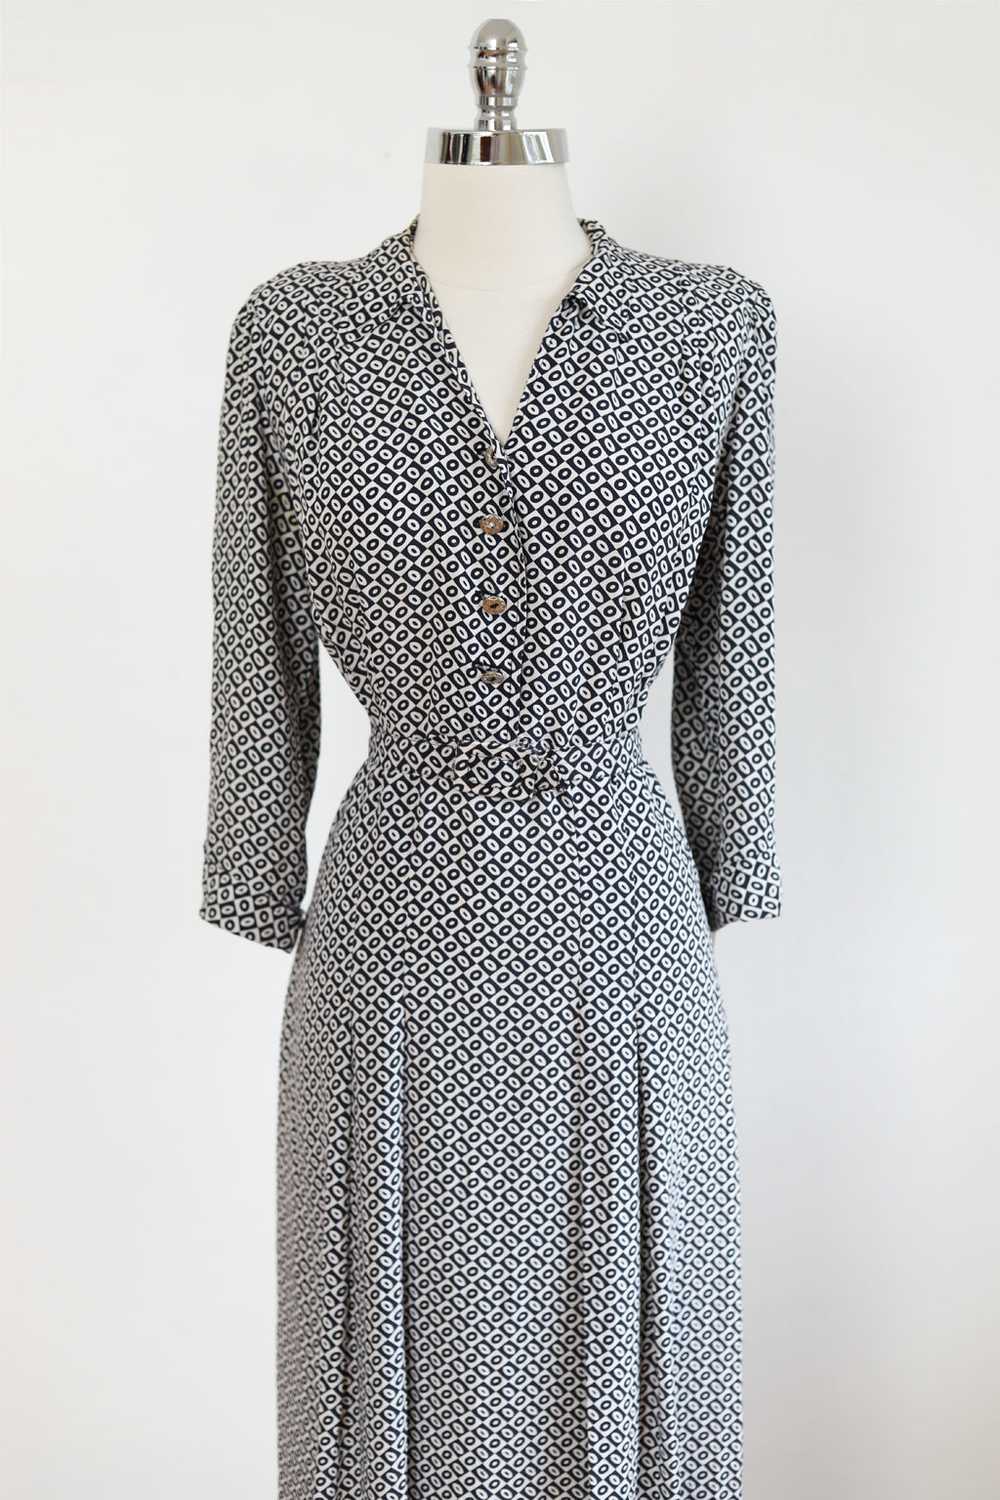 Vintage 1940s Cold Rayon Print Dress - VOLUP Blac… - image 3